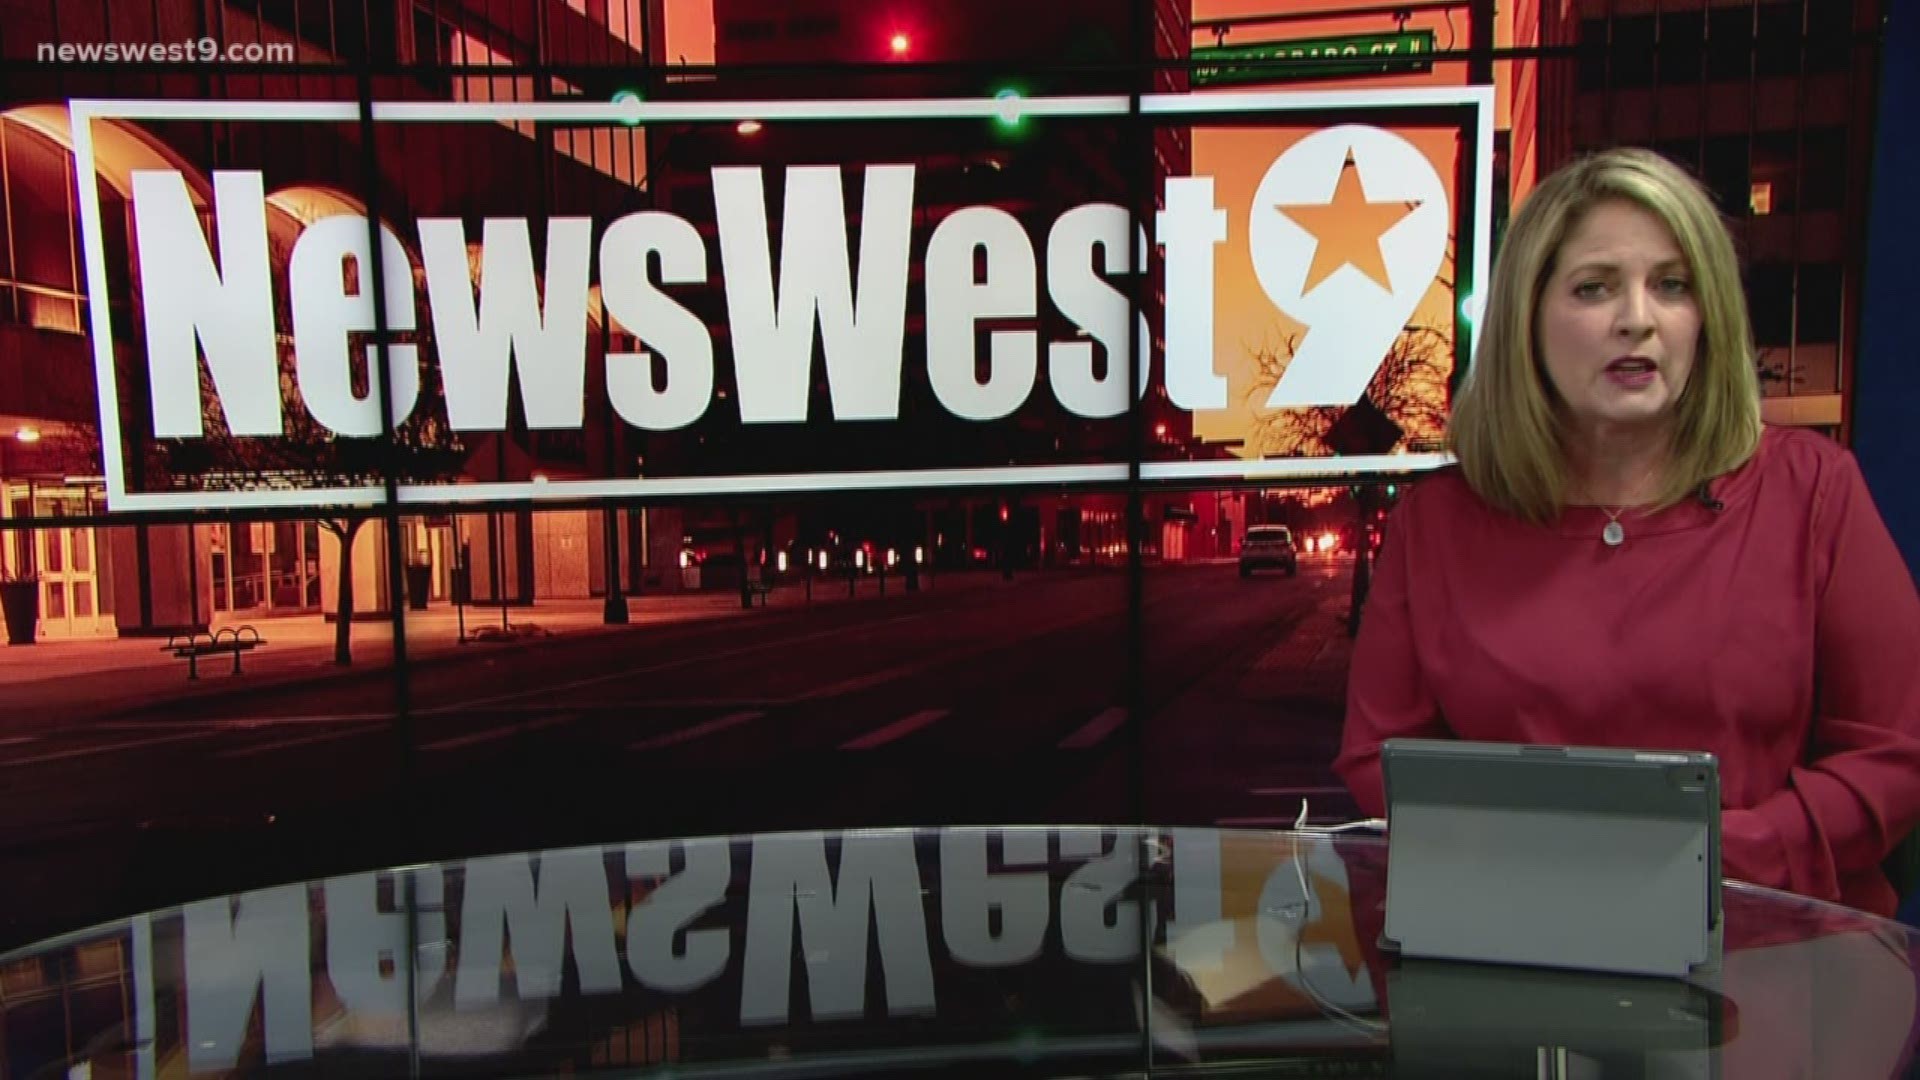 West Texas woman sentenced after sexually assaulting children |  newswest9.com